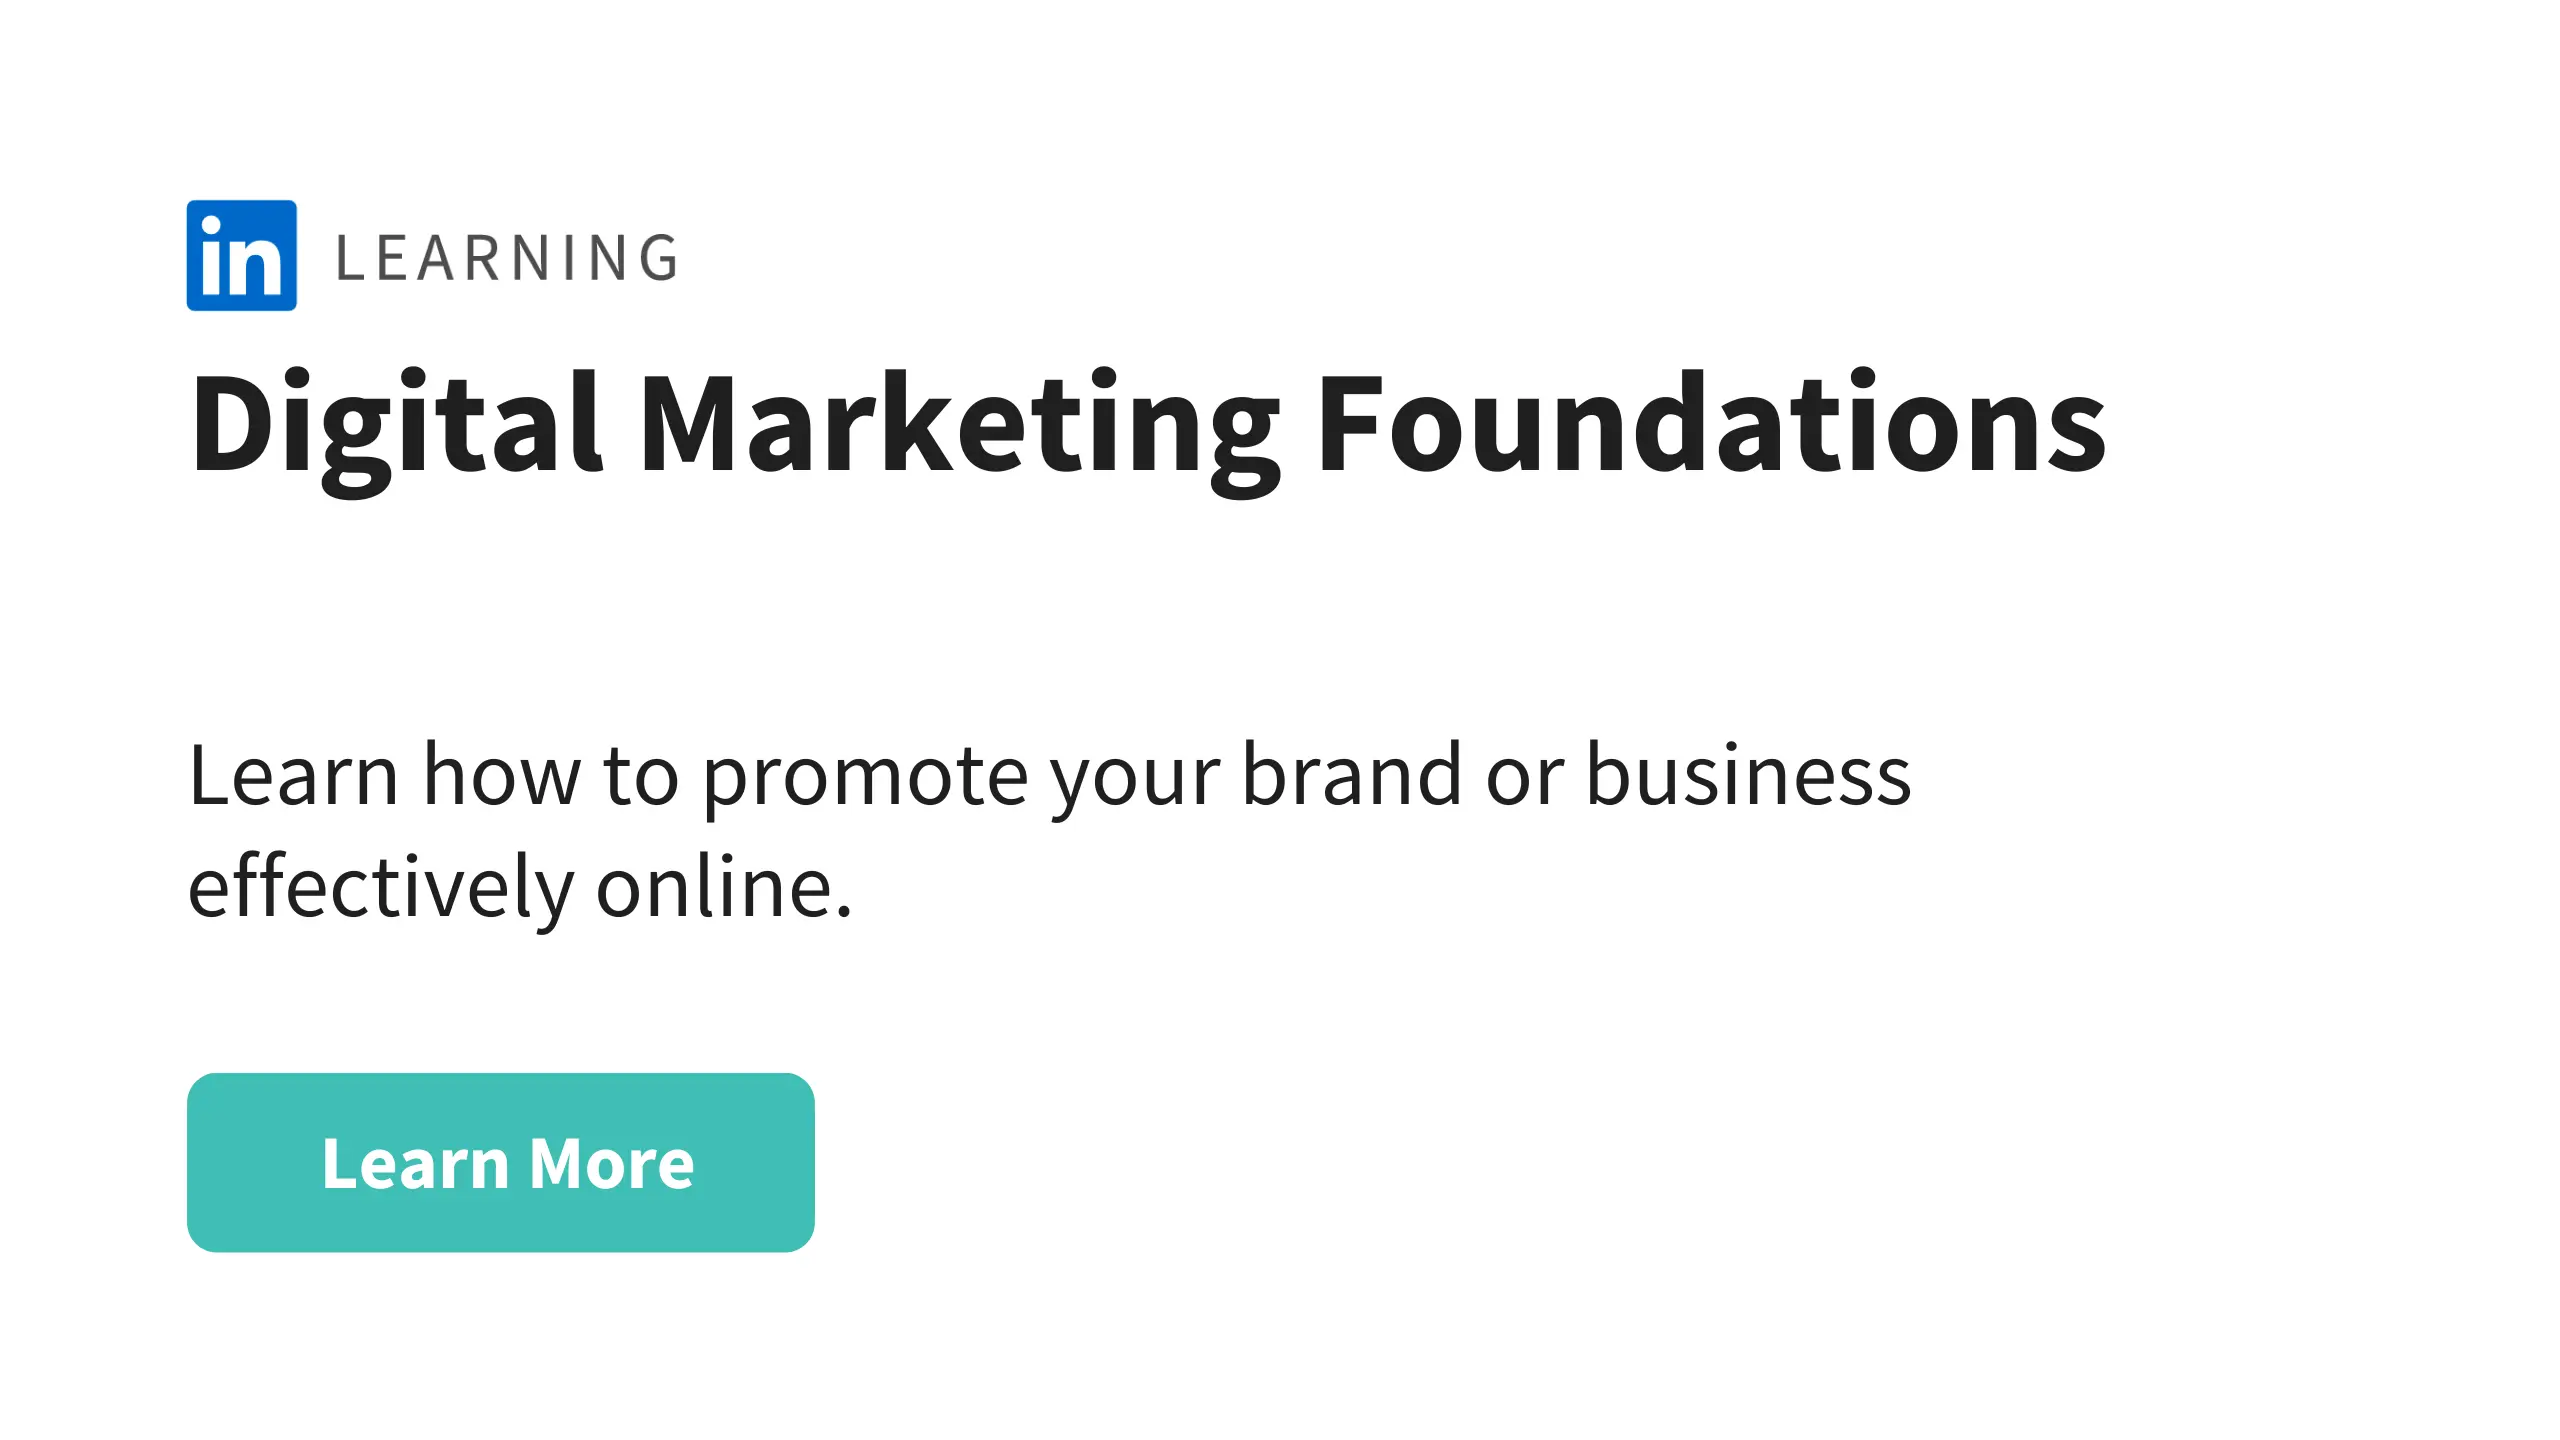 LinkedIn - Digital Marketing Foundations Course